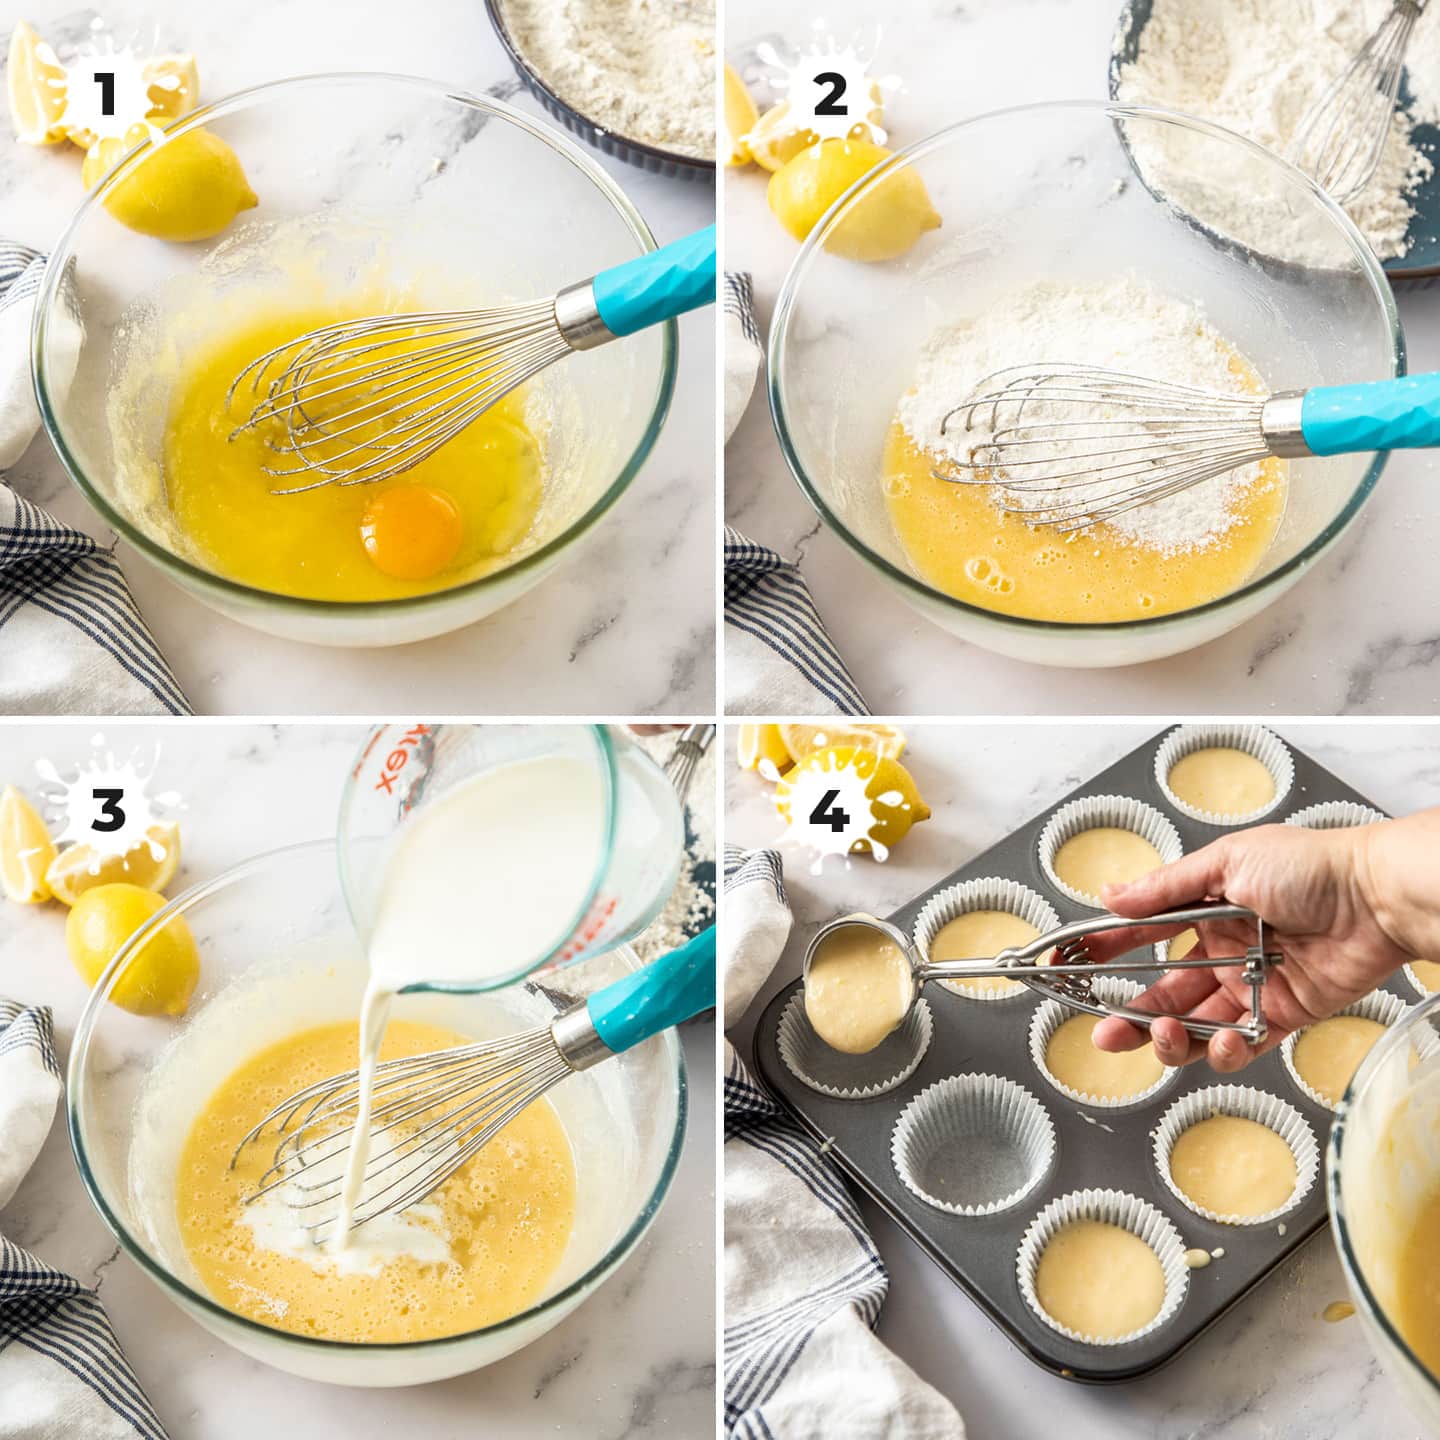 4 images showing steps to making lemon cupcake batter.